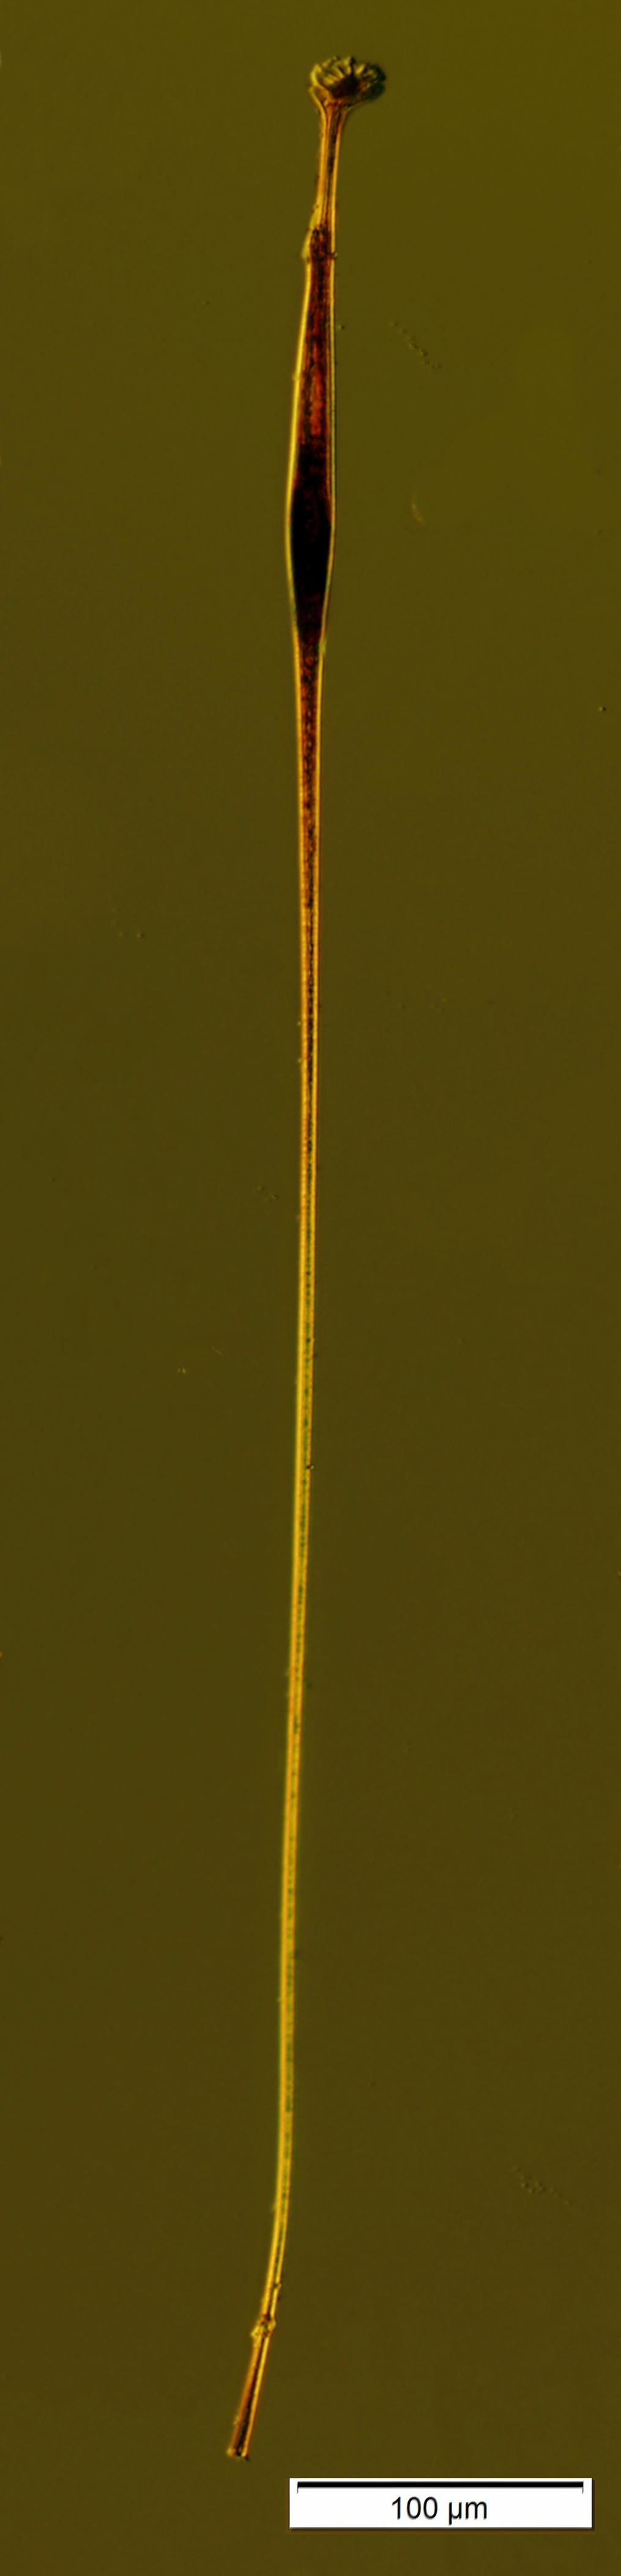 Amphisolenia extensa found at 250m depth on October 24 2017